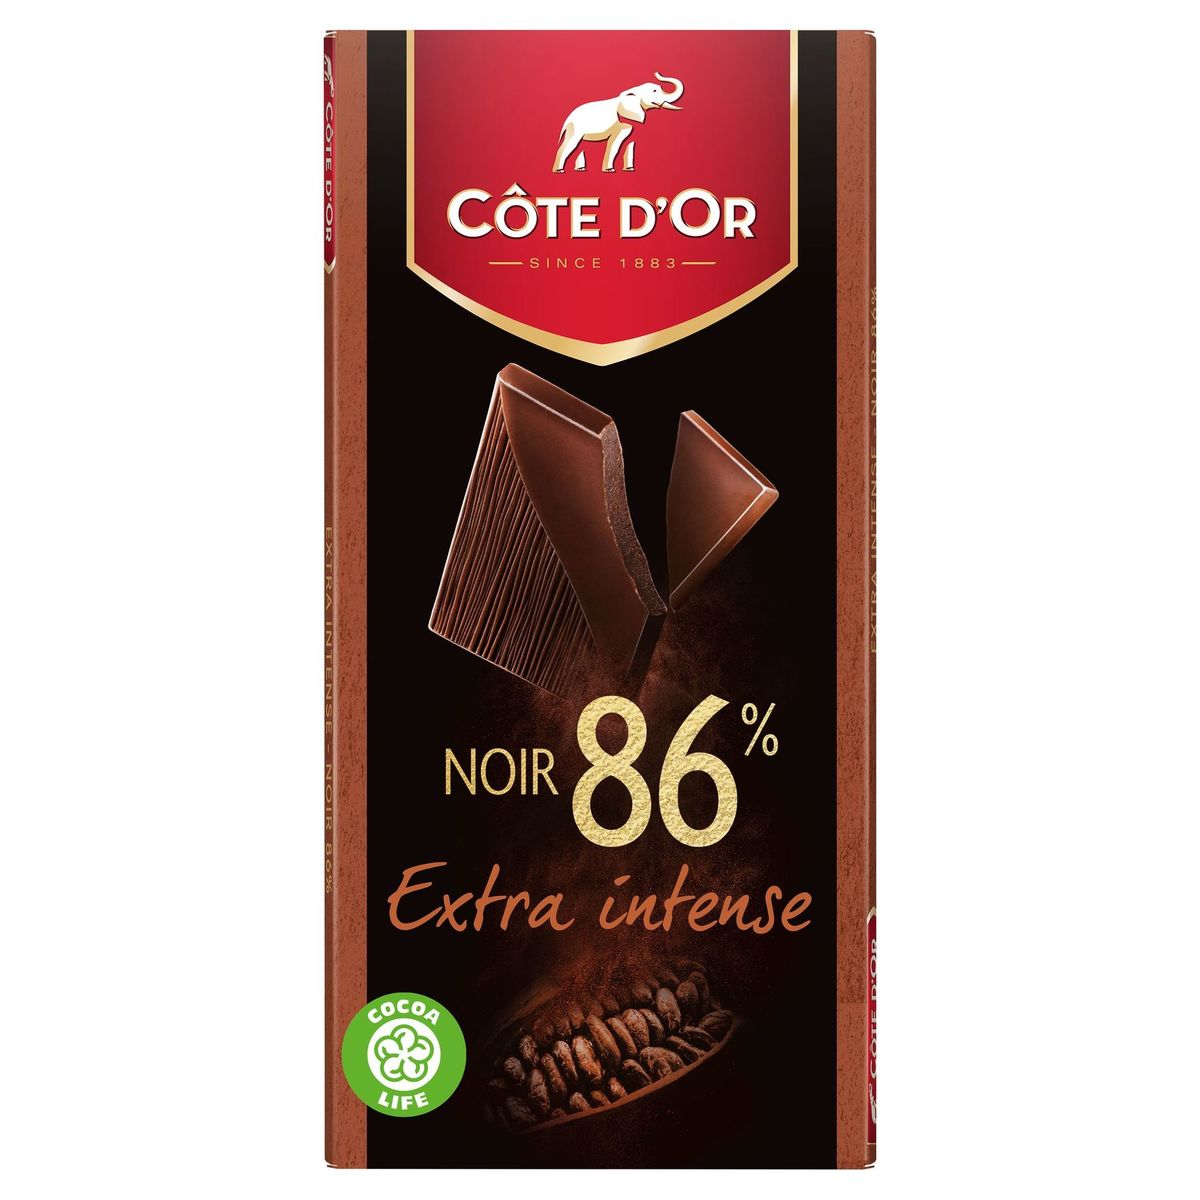 Côte d'Or Fin Intense Tablette De Chocolat Noir Extra 86% 100 g